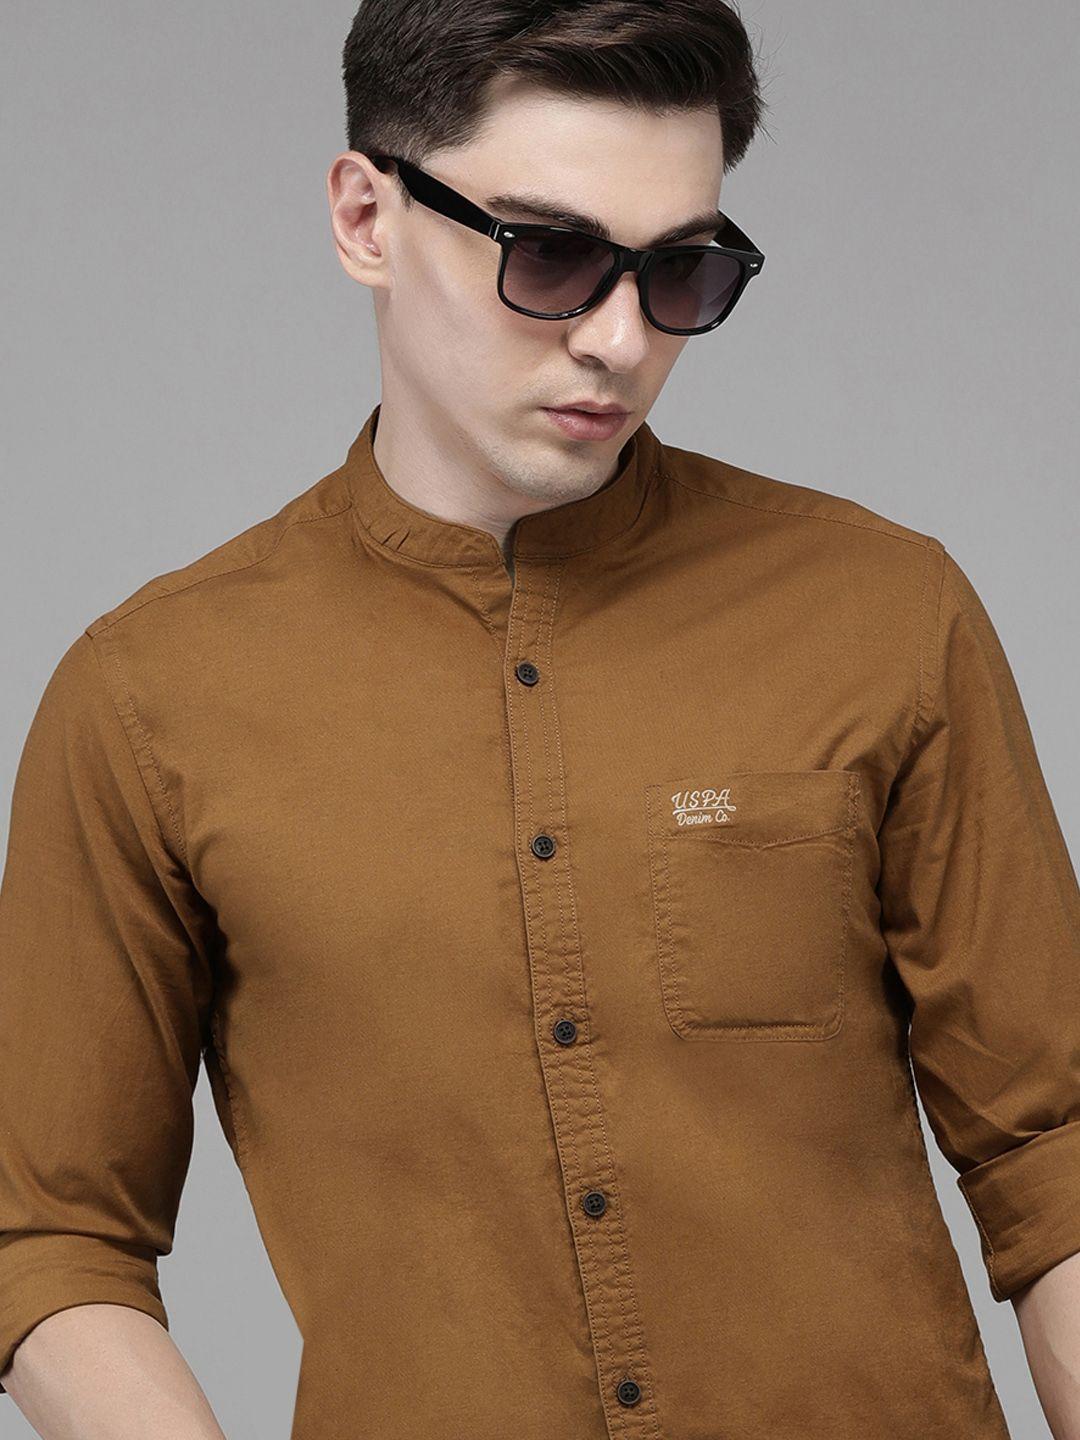 u.s. polo assn. denim co. co men tan brown solid pure cotton casual shirt